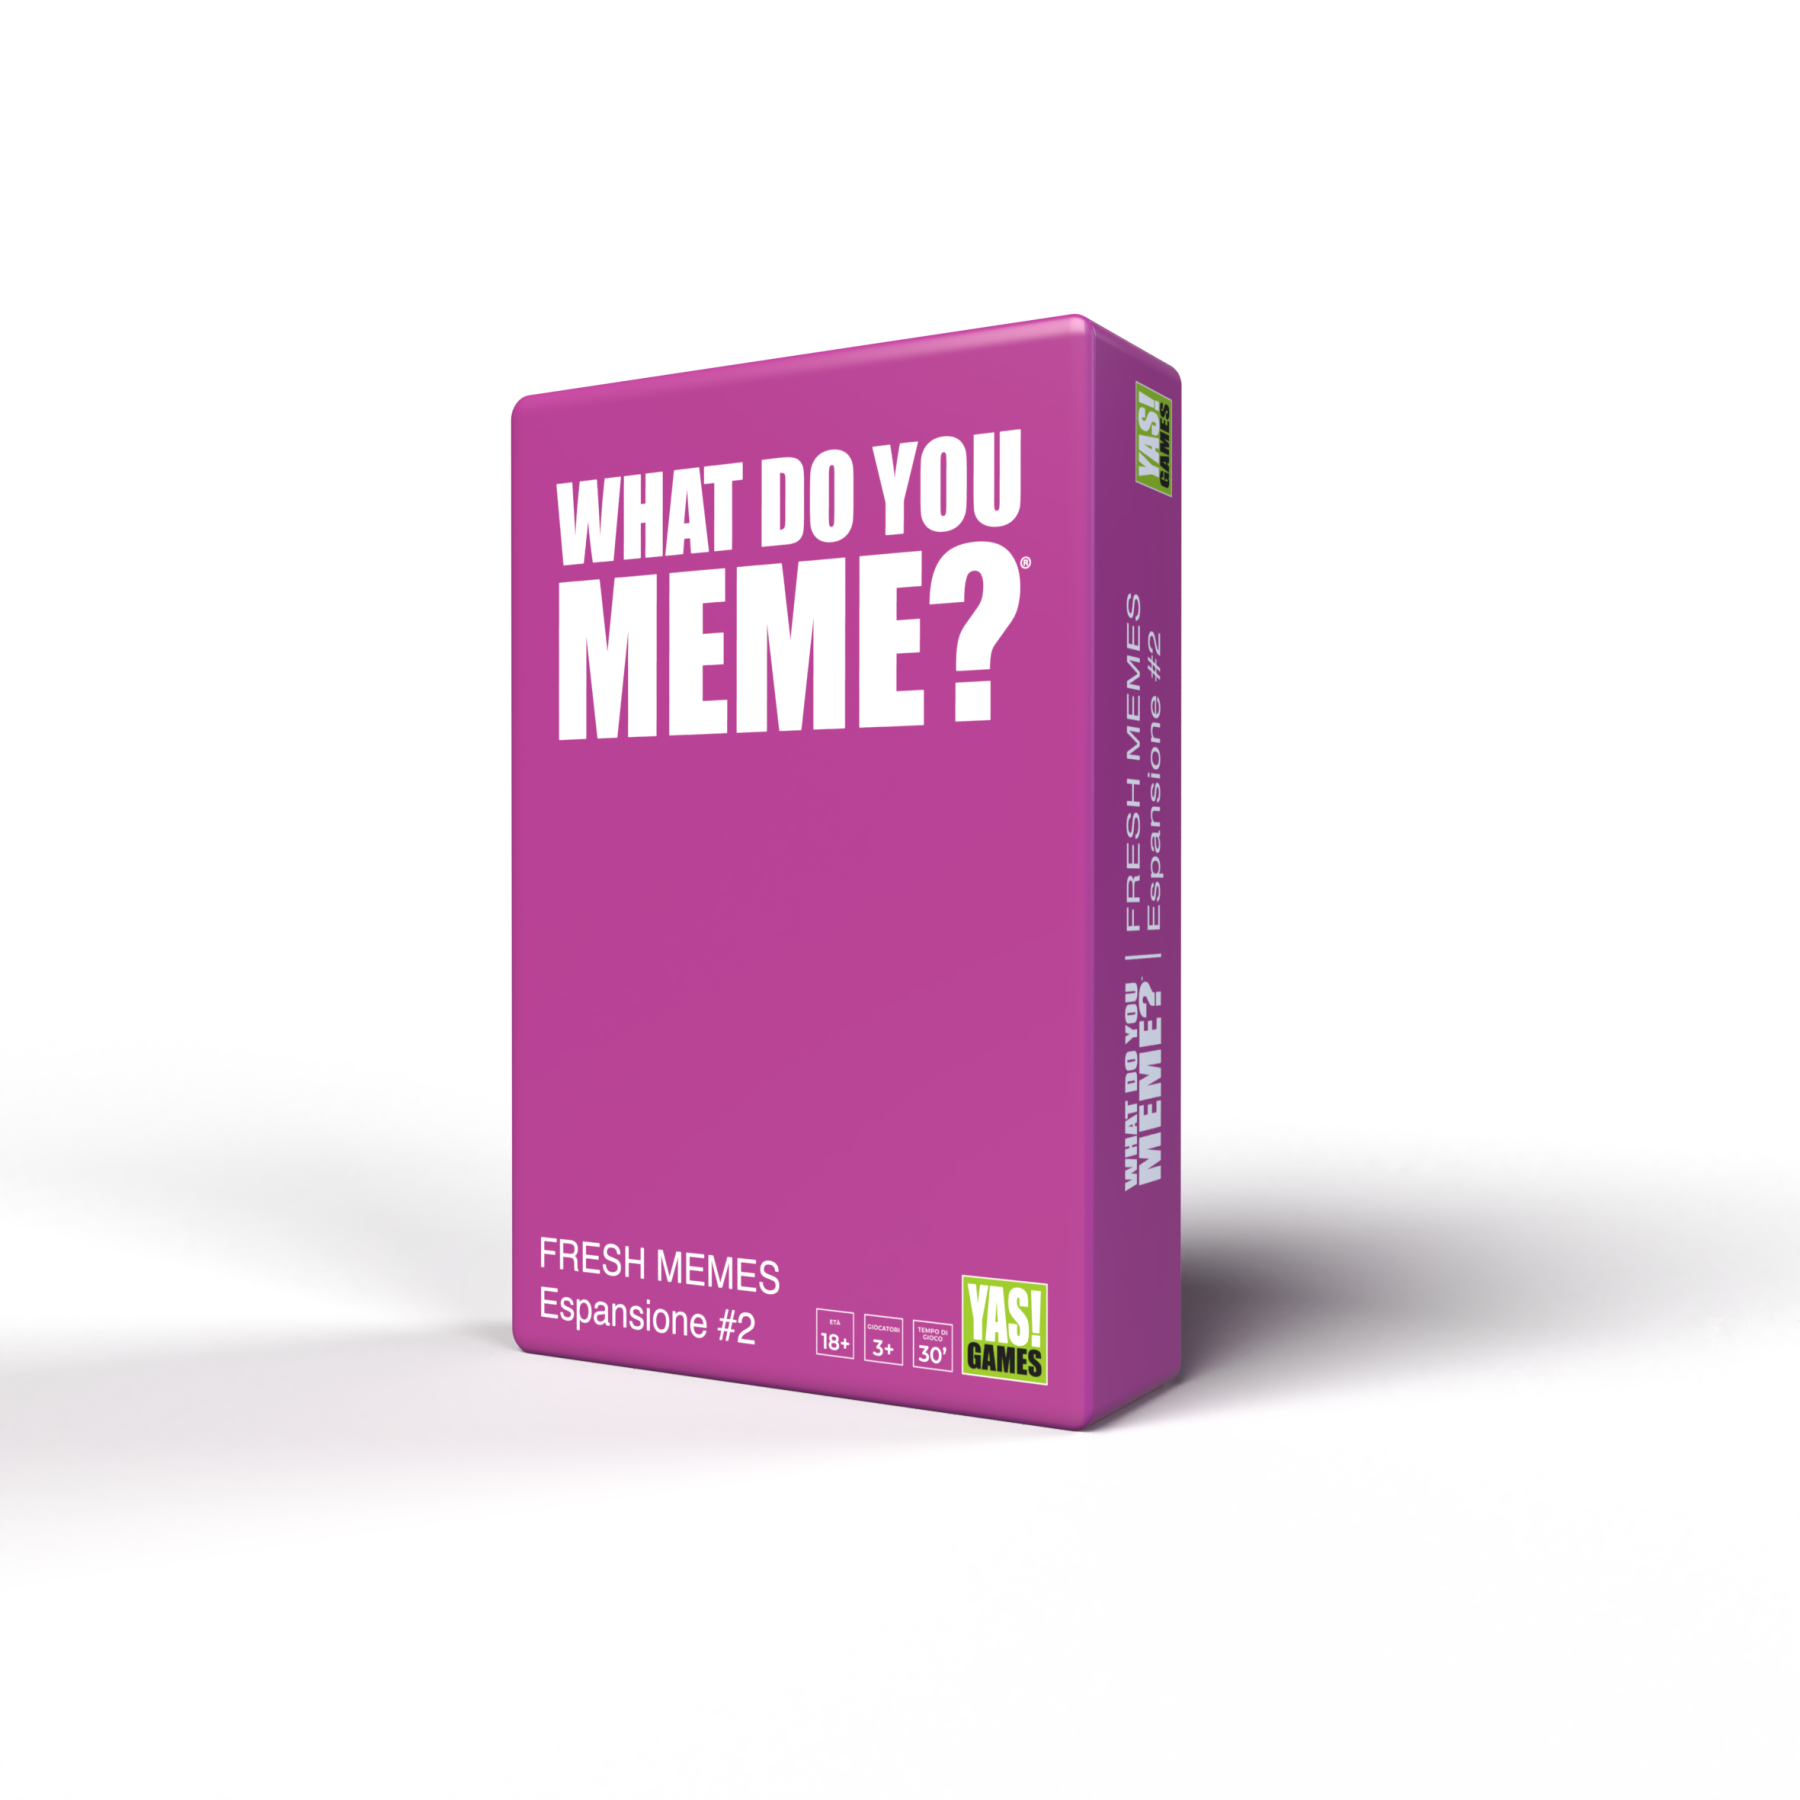 Yas!games - what do you meme? espansione    fresh memes #2 - vietato ai minori di 18 anni - 